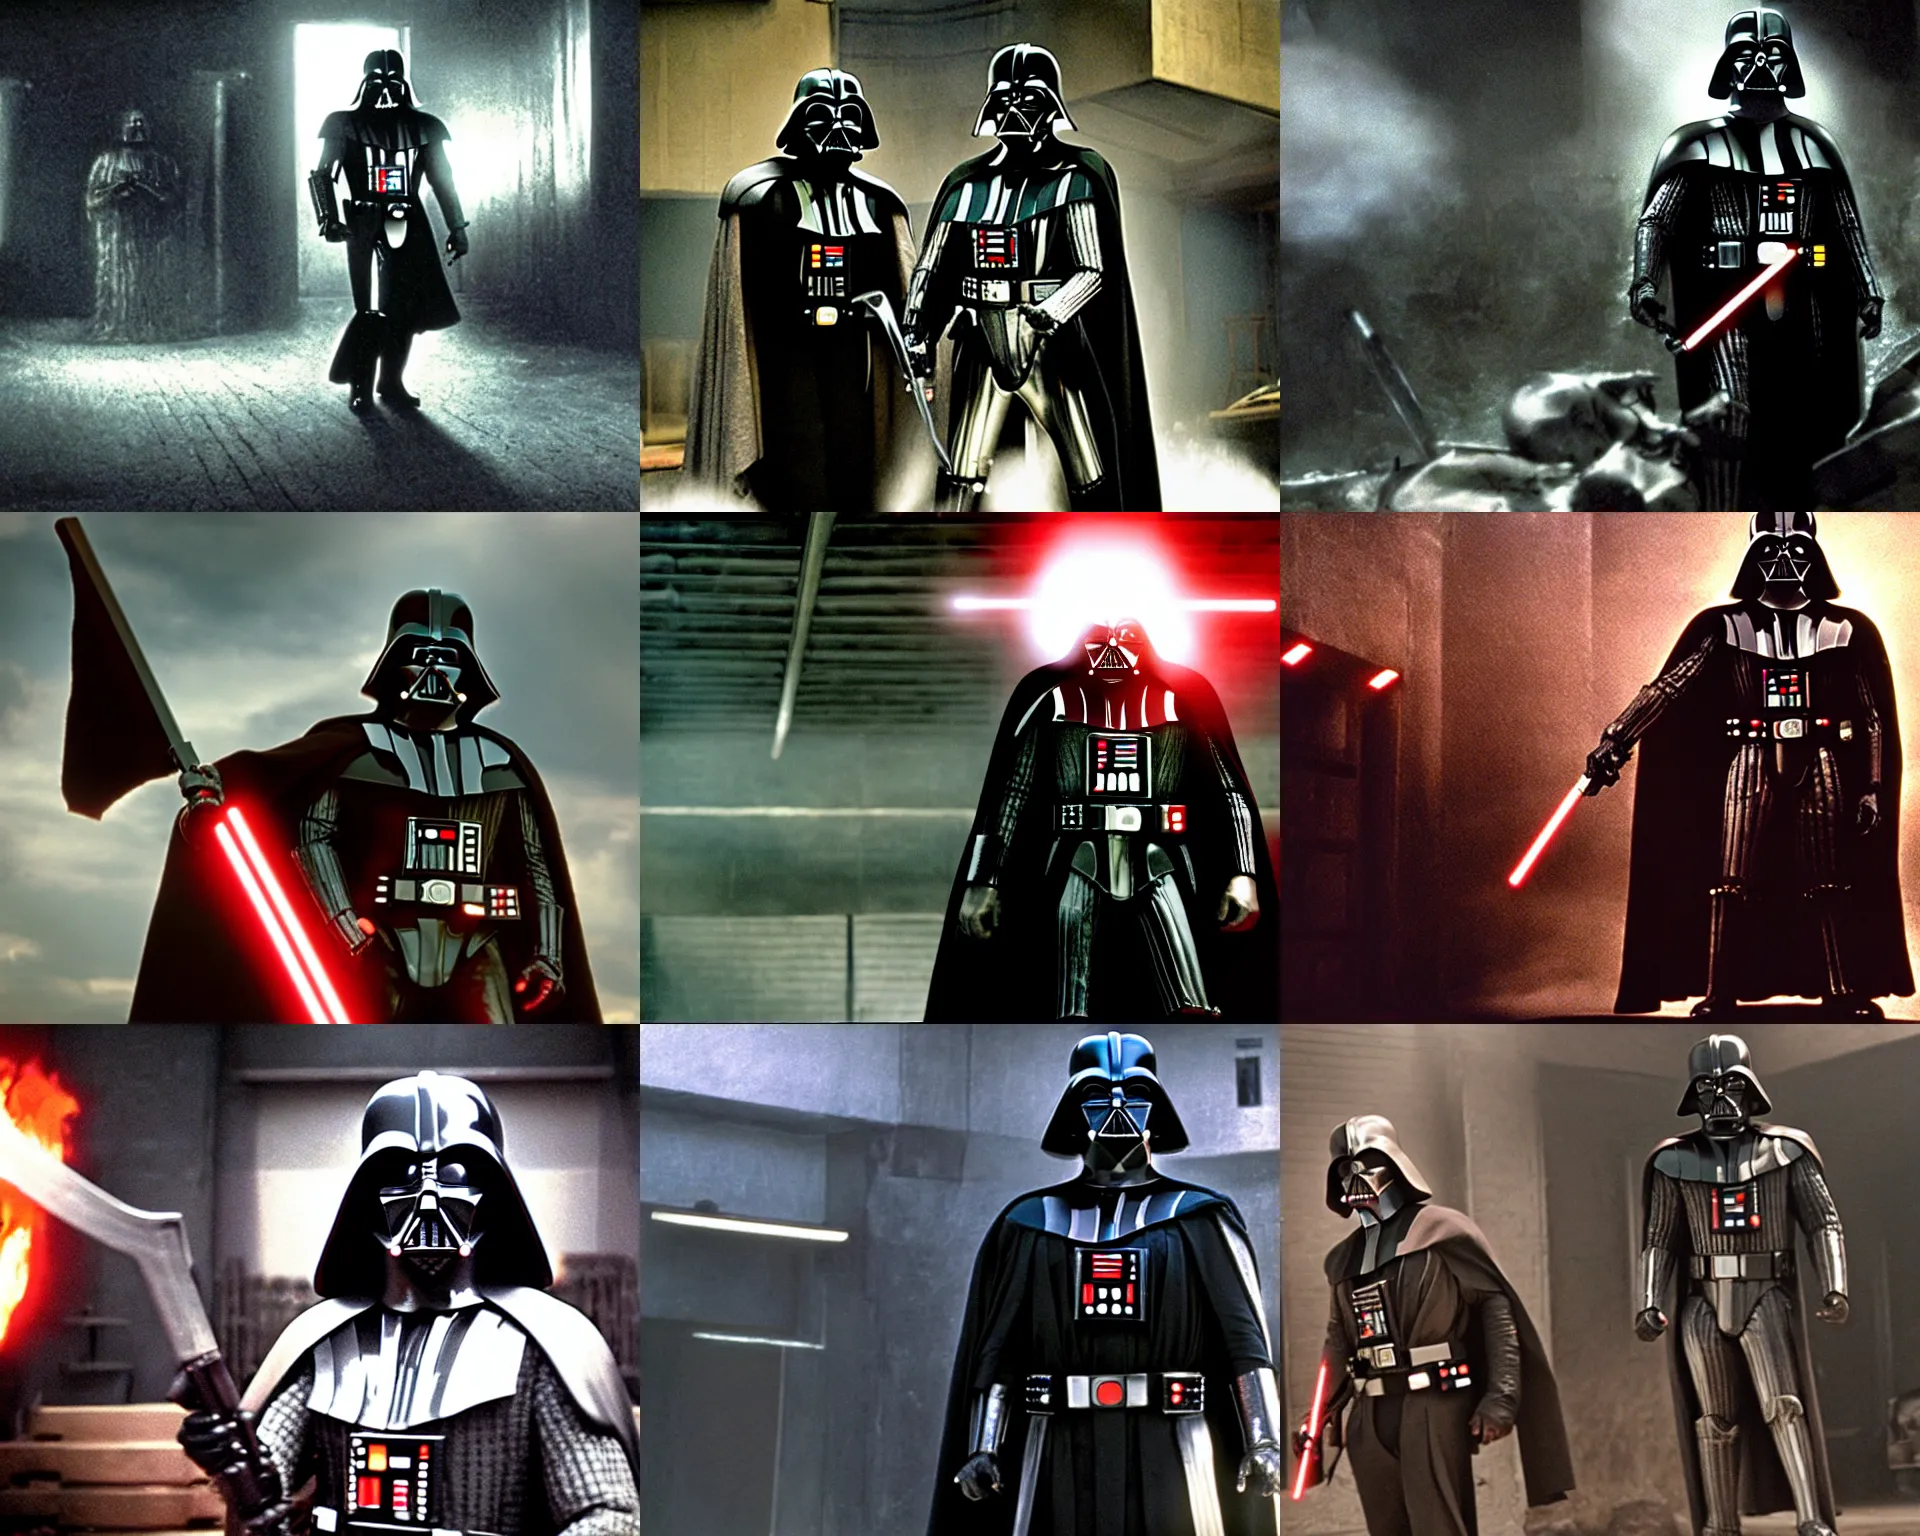 Prompt: film still from the movie Machete starring Darth Vader